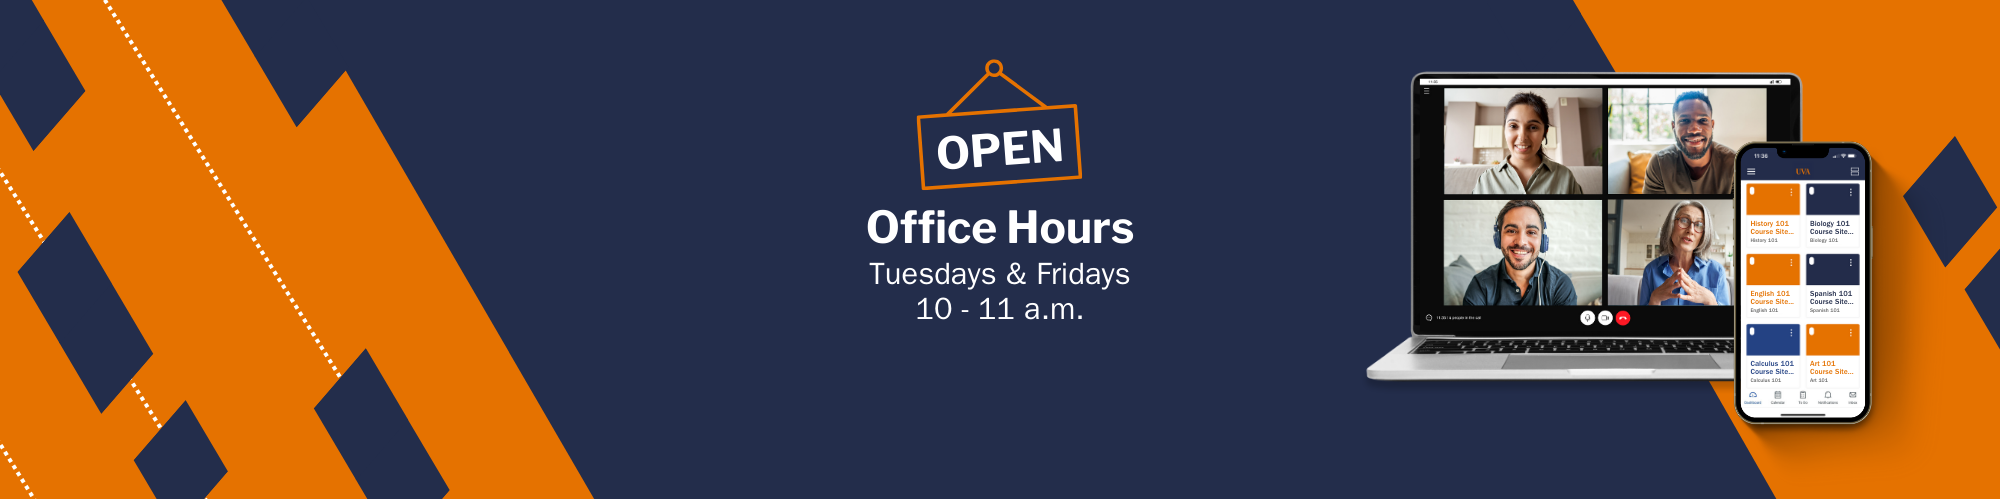 open office hours uvavcanvas